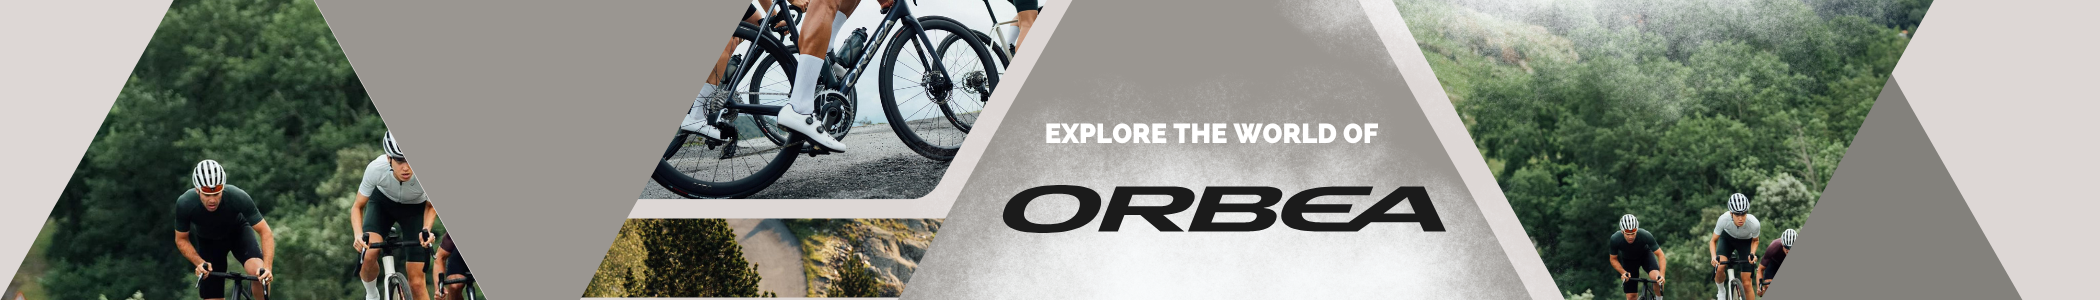 Explore the world of Orbea!